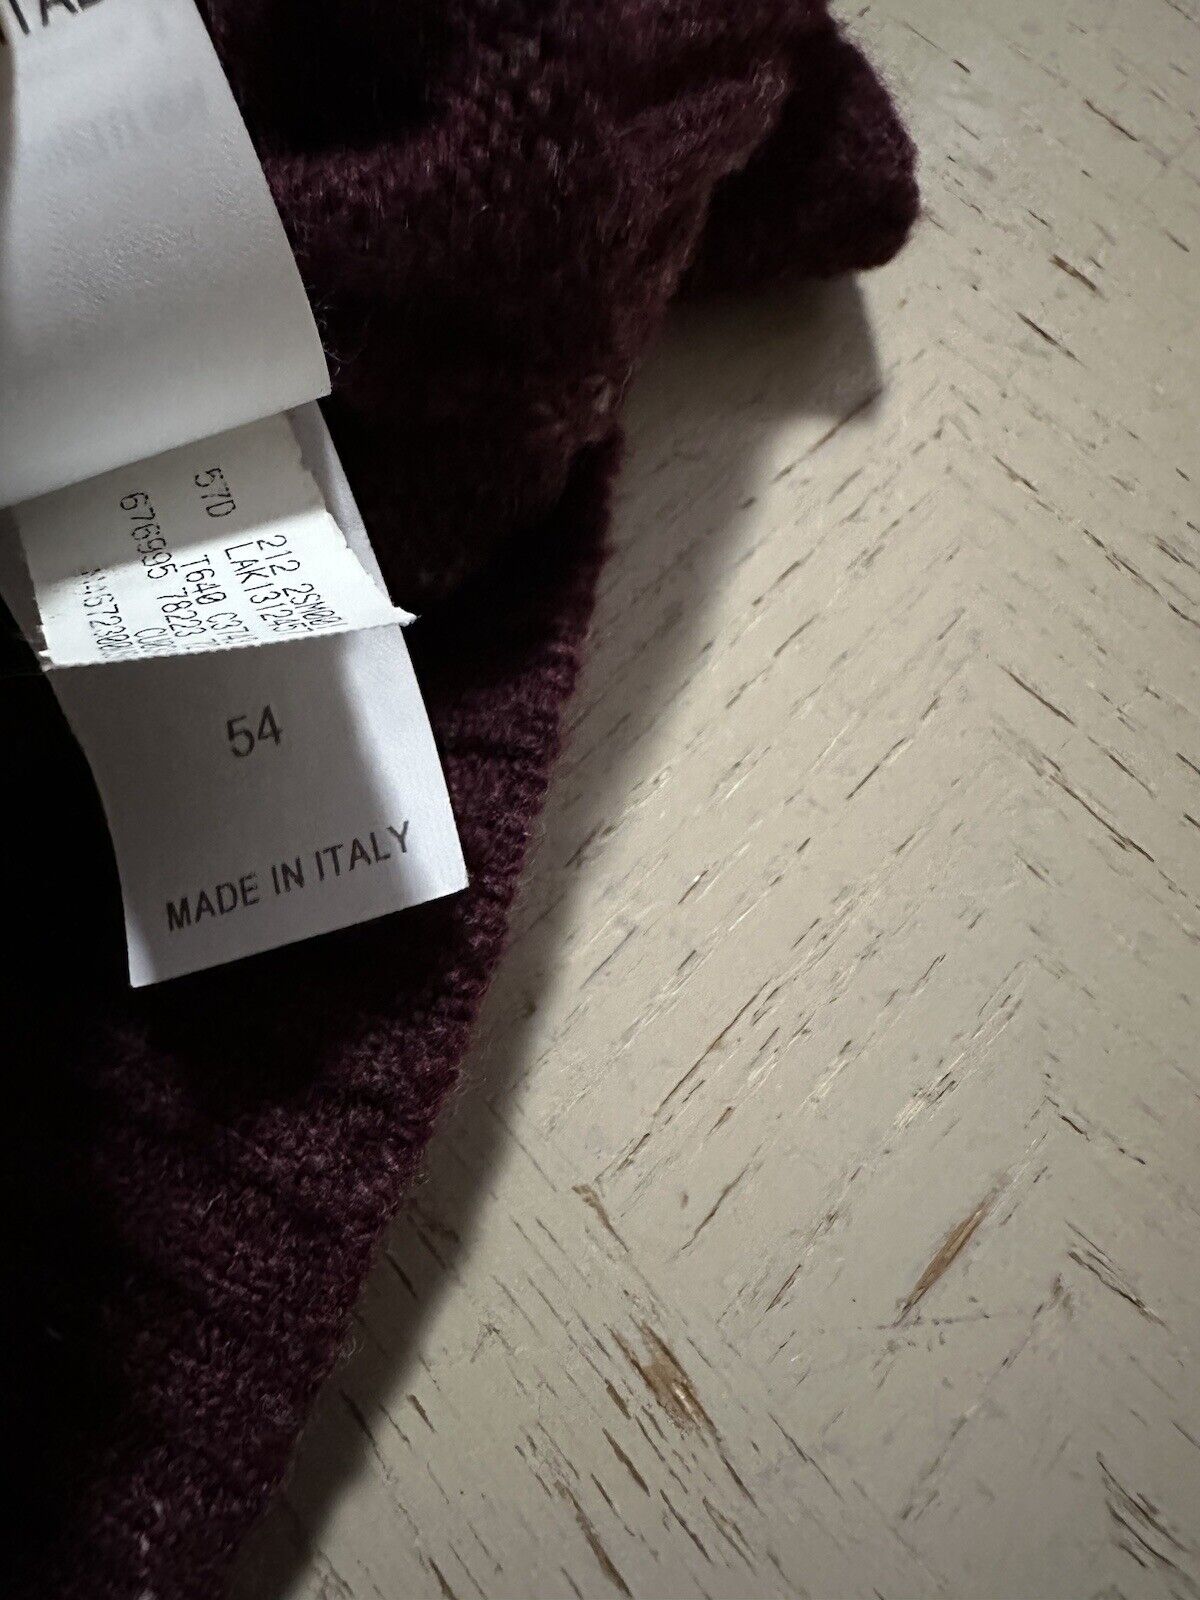 New $1995 Brunello Cucinelli Men Flecked Wool & Cash.  Sweater Burgundy 54 Eu/XL